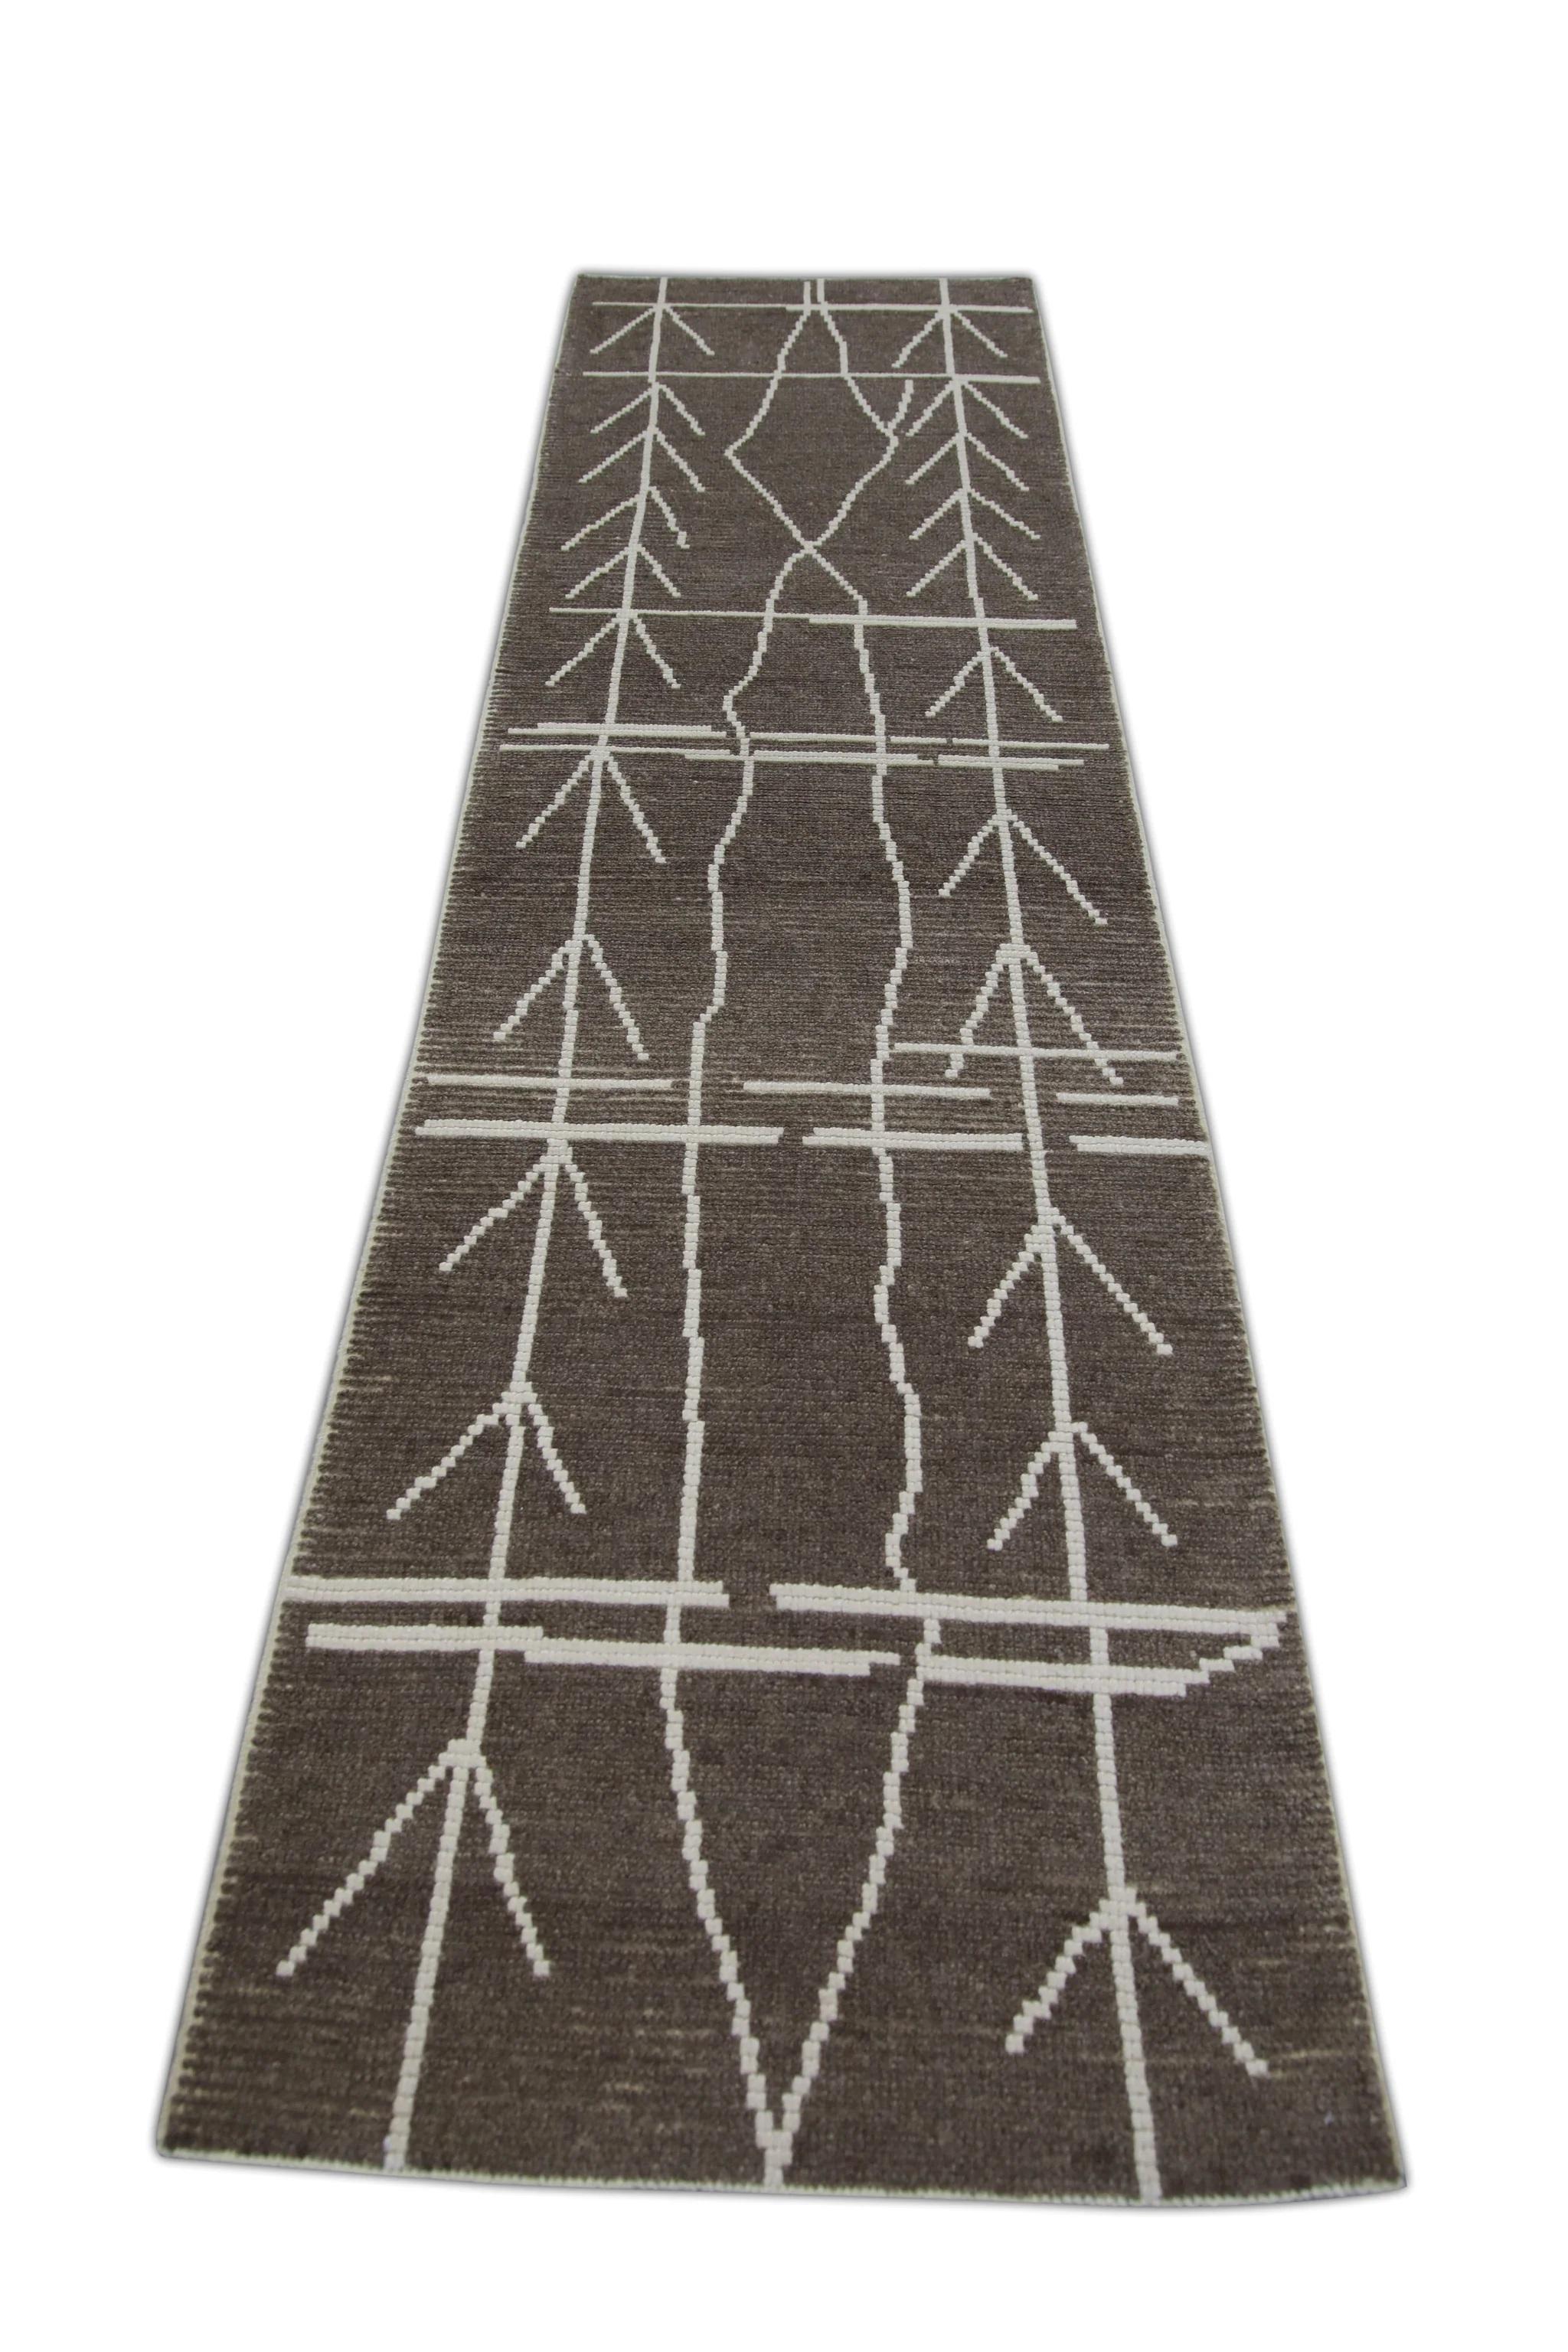 Brown Modern Handmade Wool Tulu Runner in Geometric Design 2'10